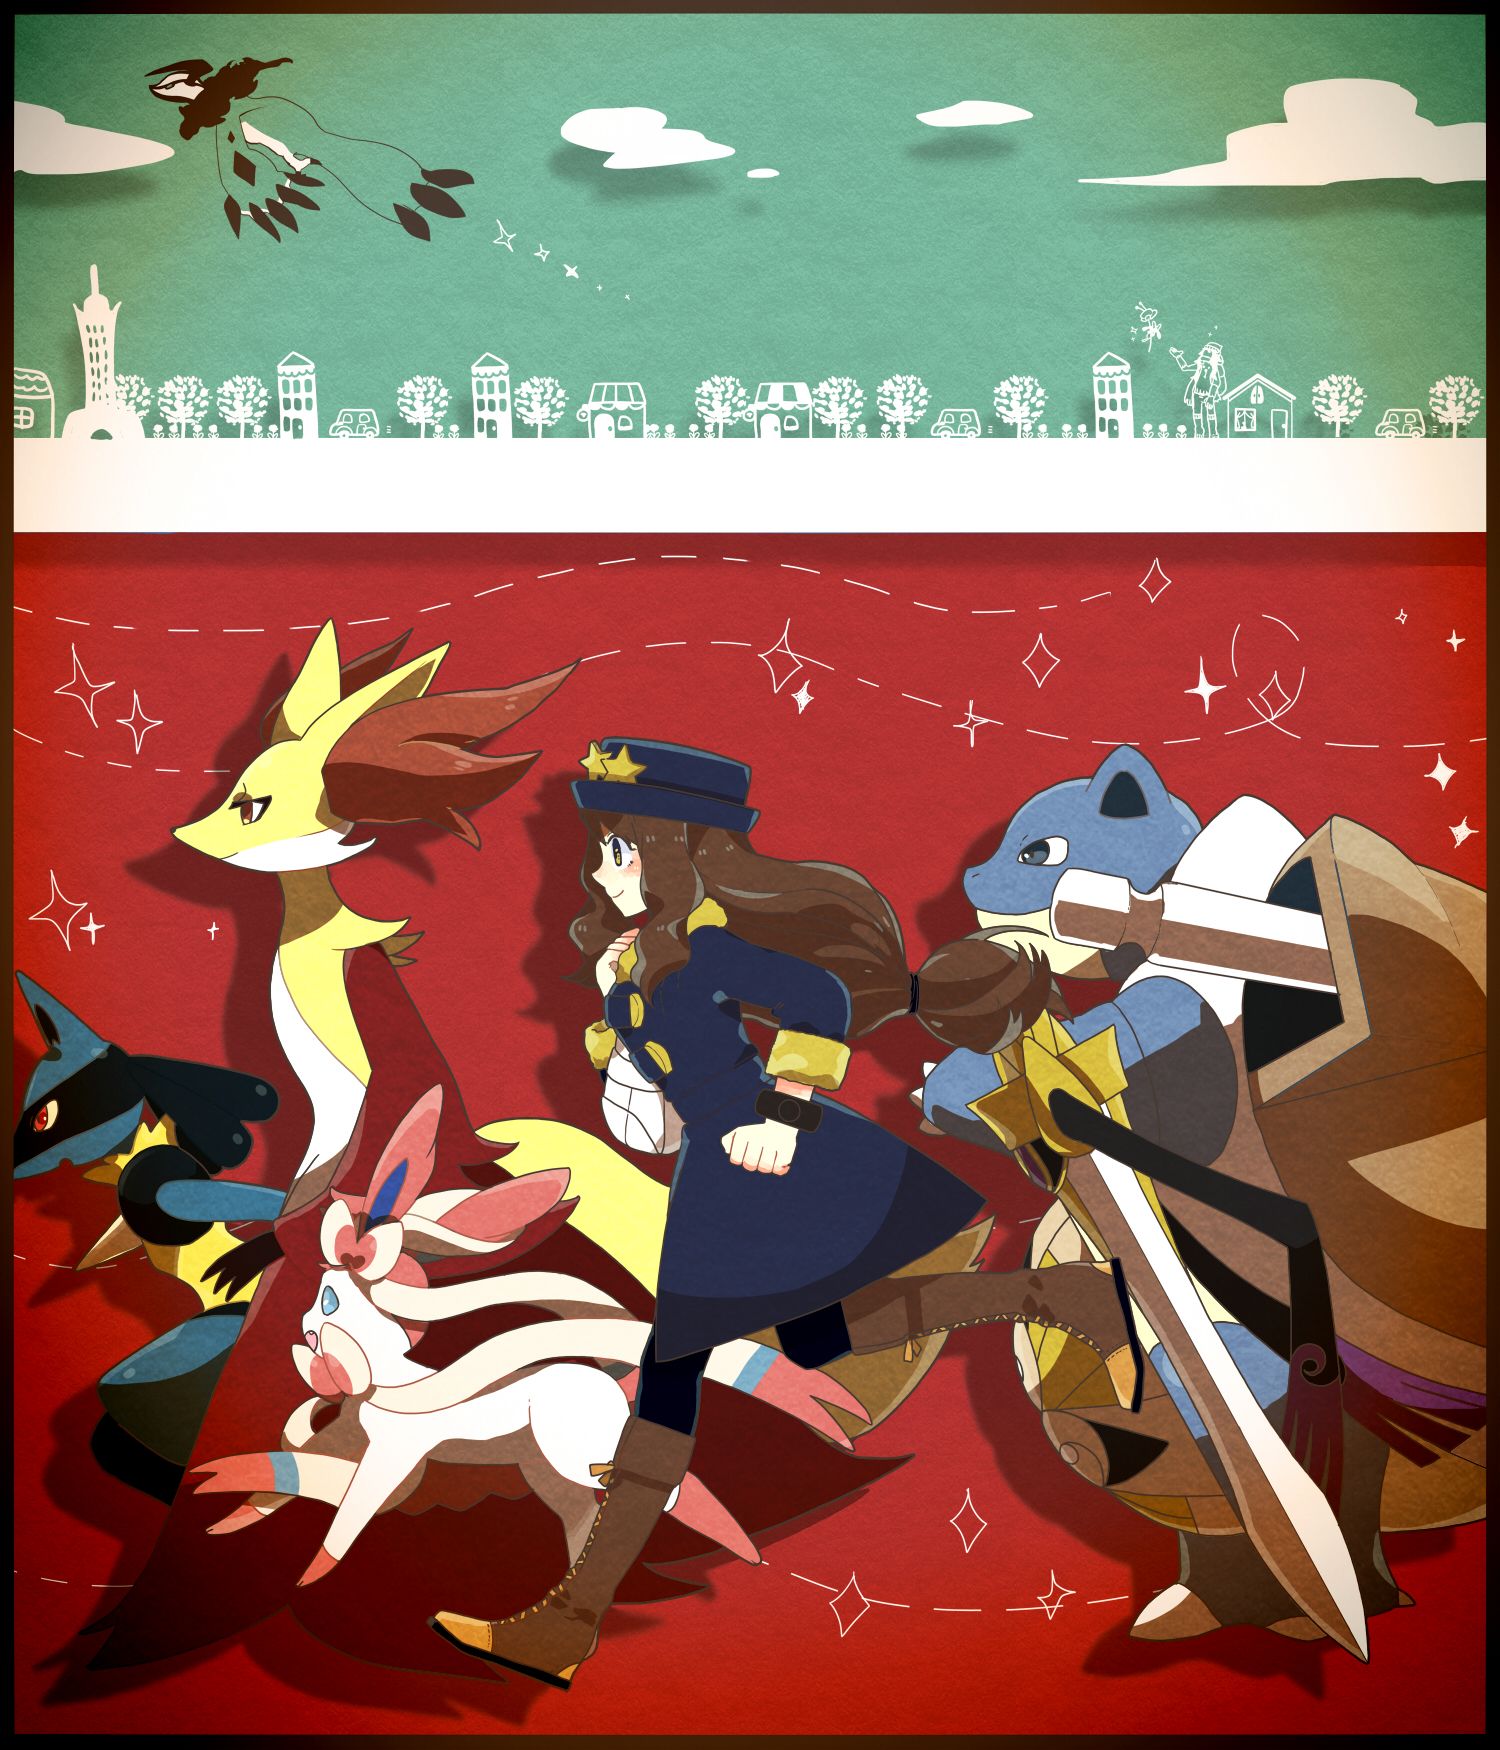 Genesect - Pokémon  page 2 of 2 - Zerochan Anime Image Board